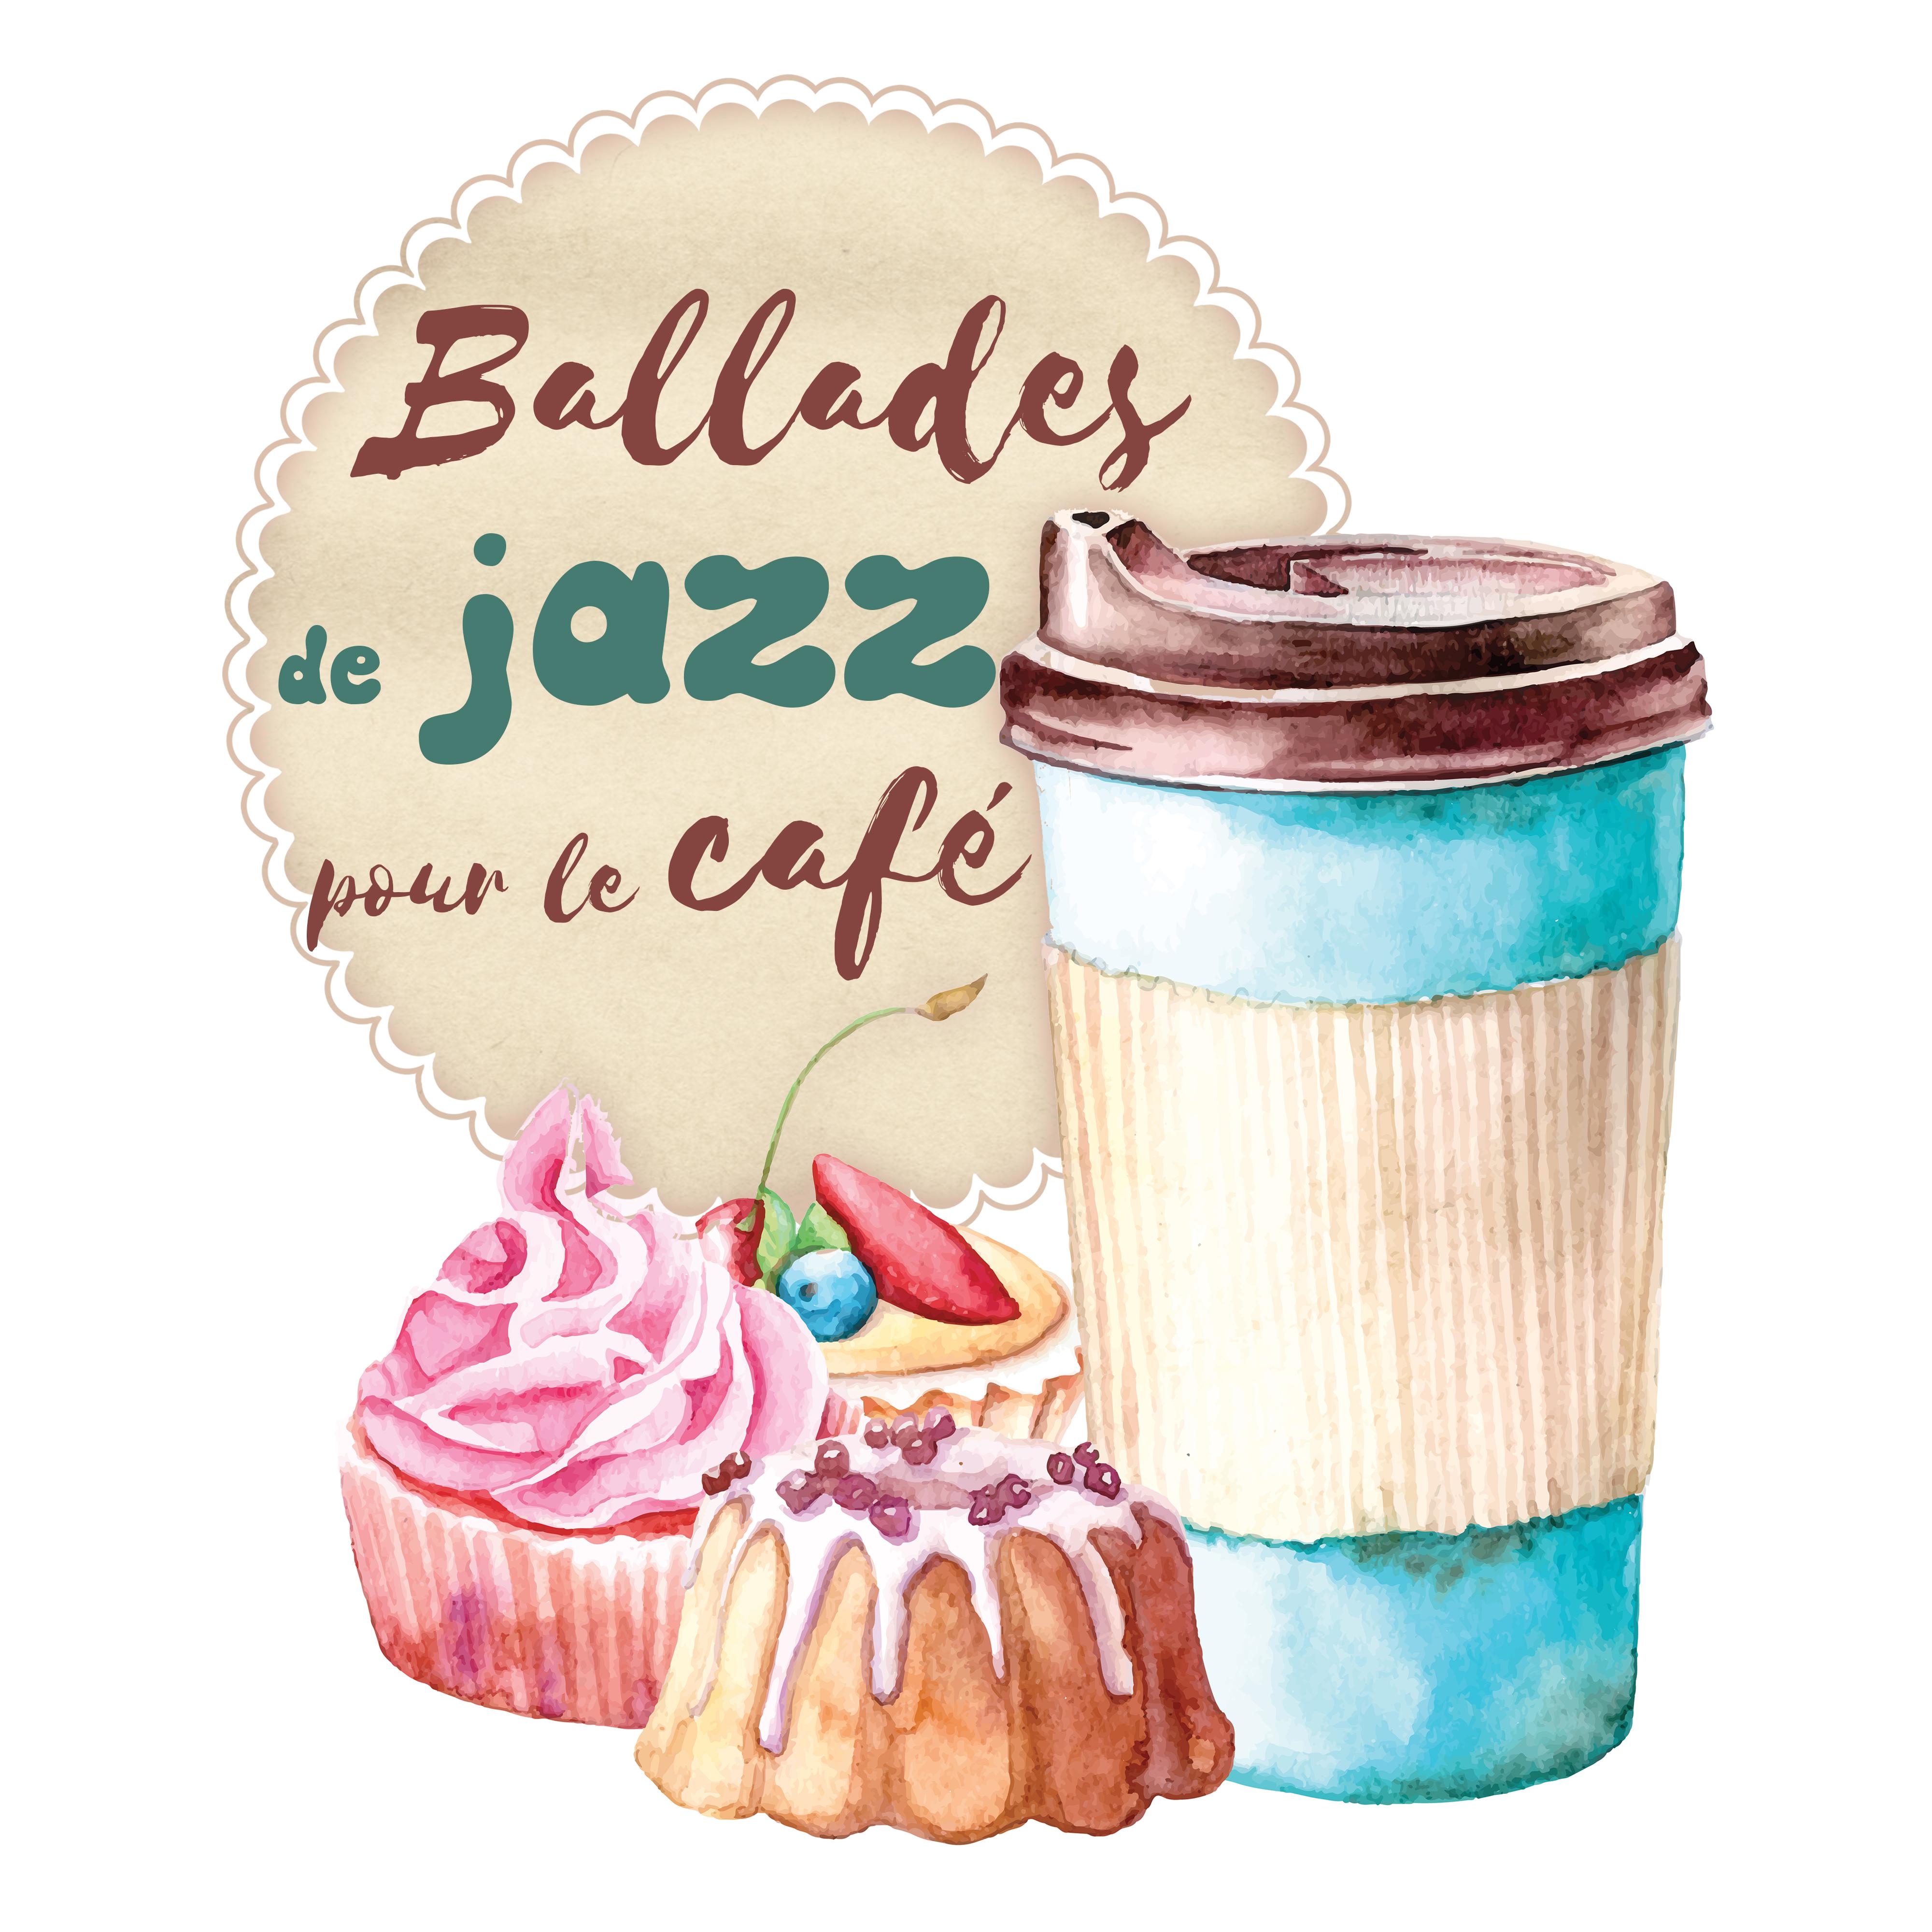 Ballades de jazz pour le cafe